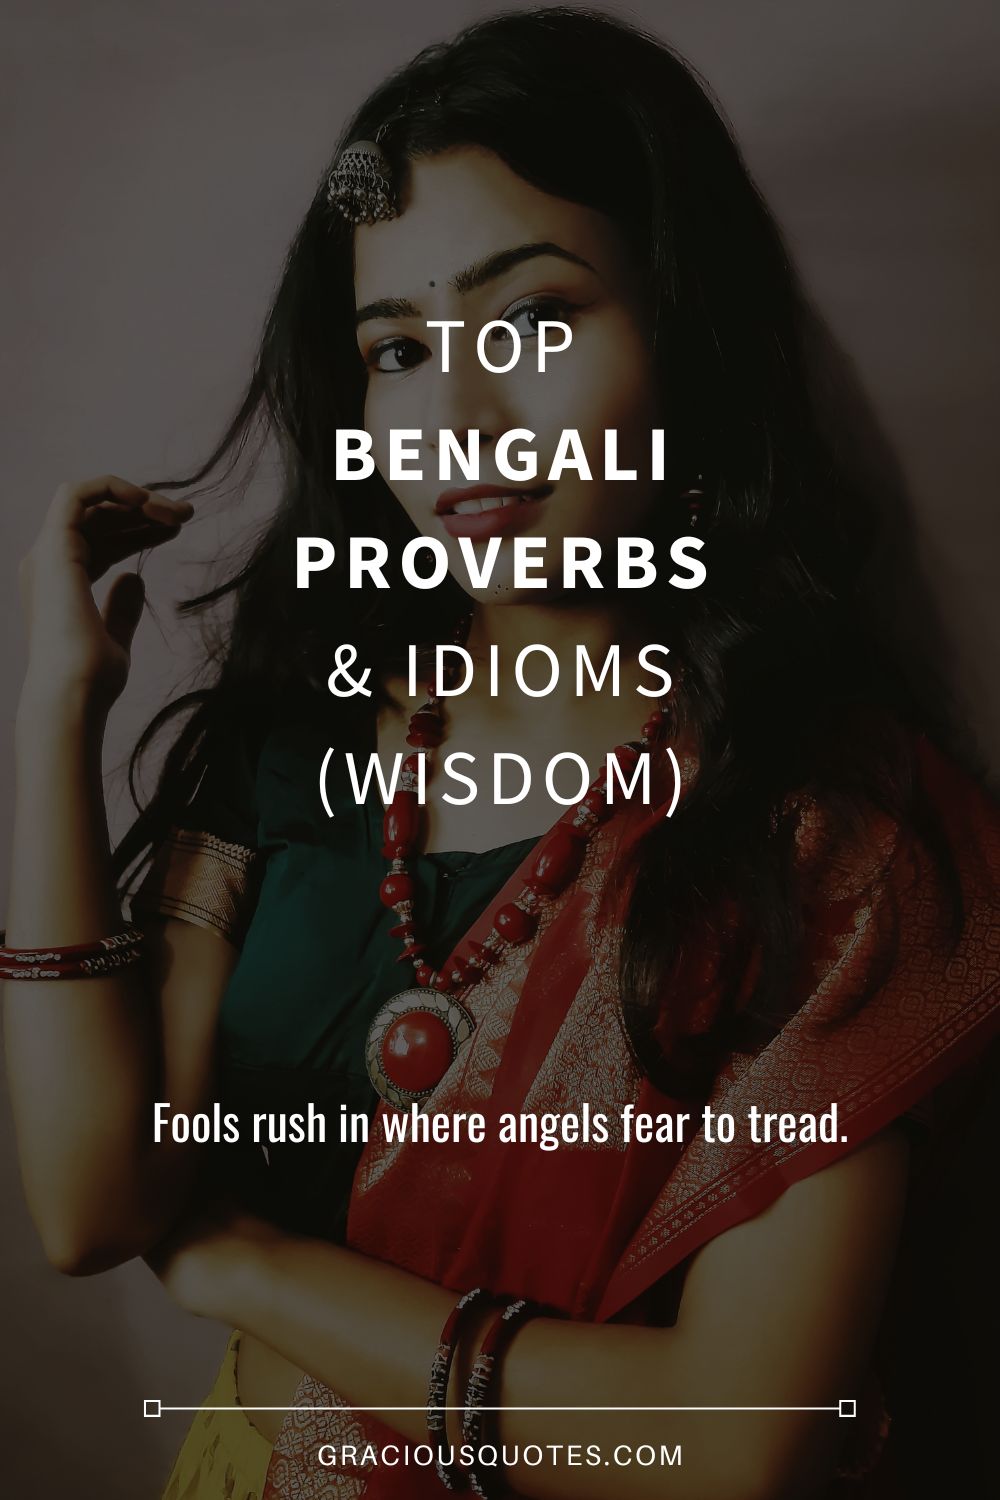 Top Bengali Proverbs & Idioms (WISDOM) - Gracious Quotes